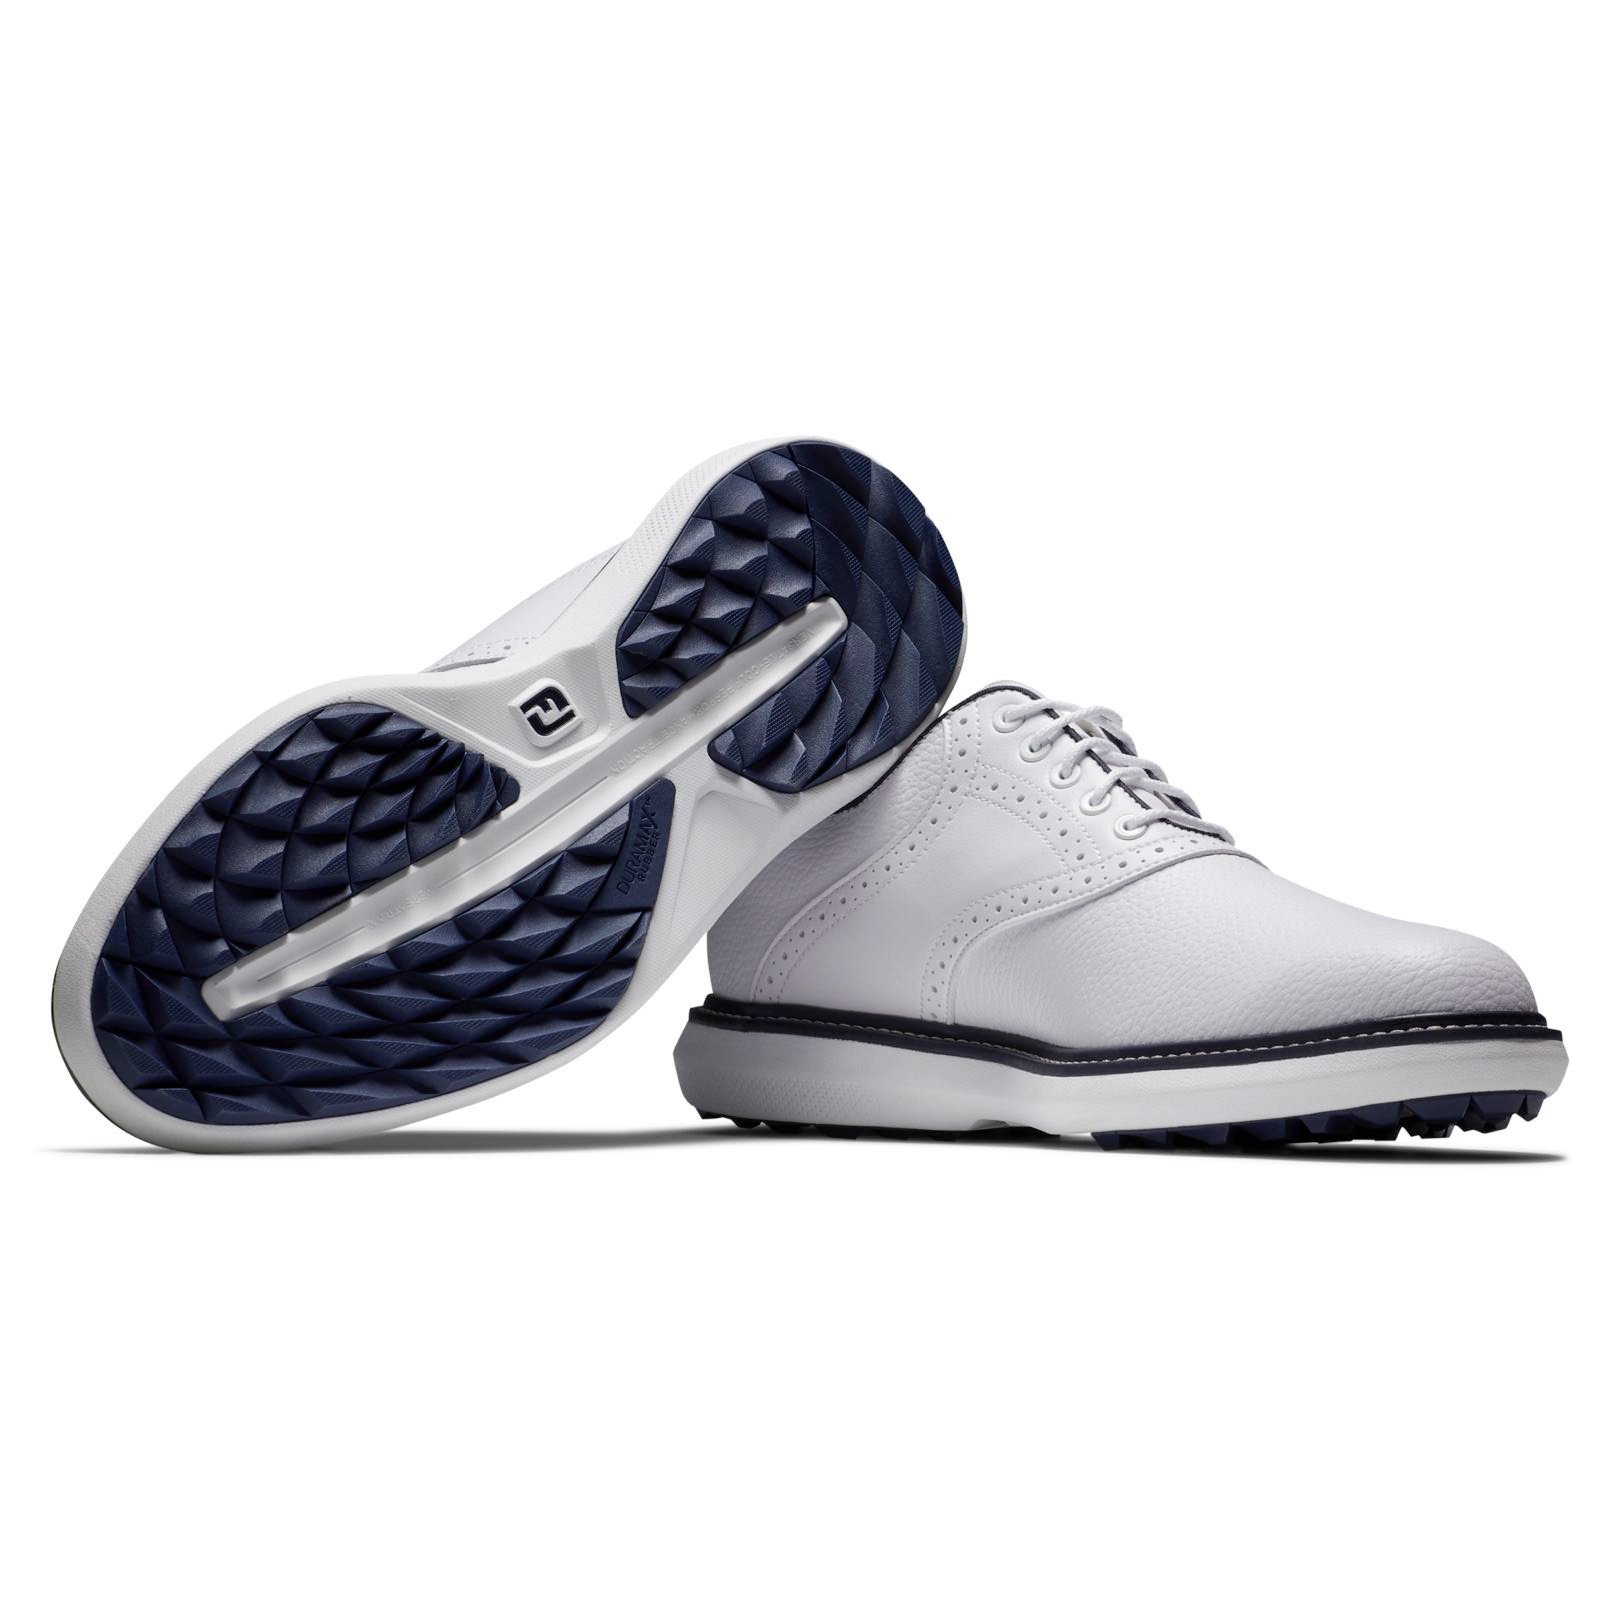 FootJoy Traditions 23 Men's Spikeless Golf Shoe